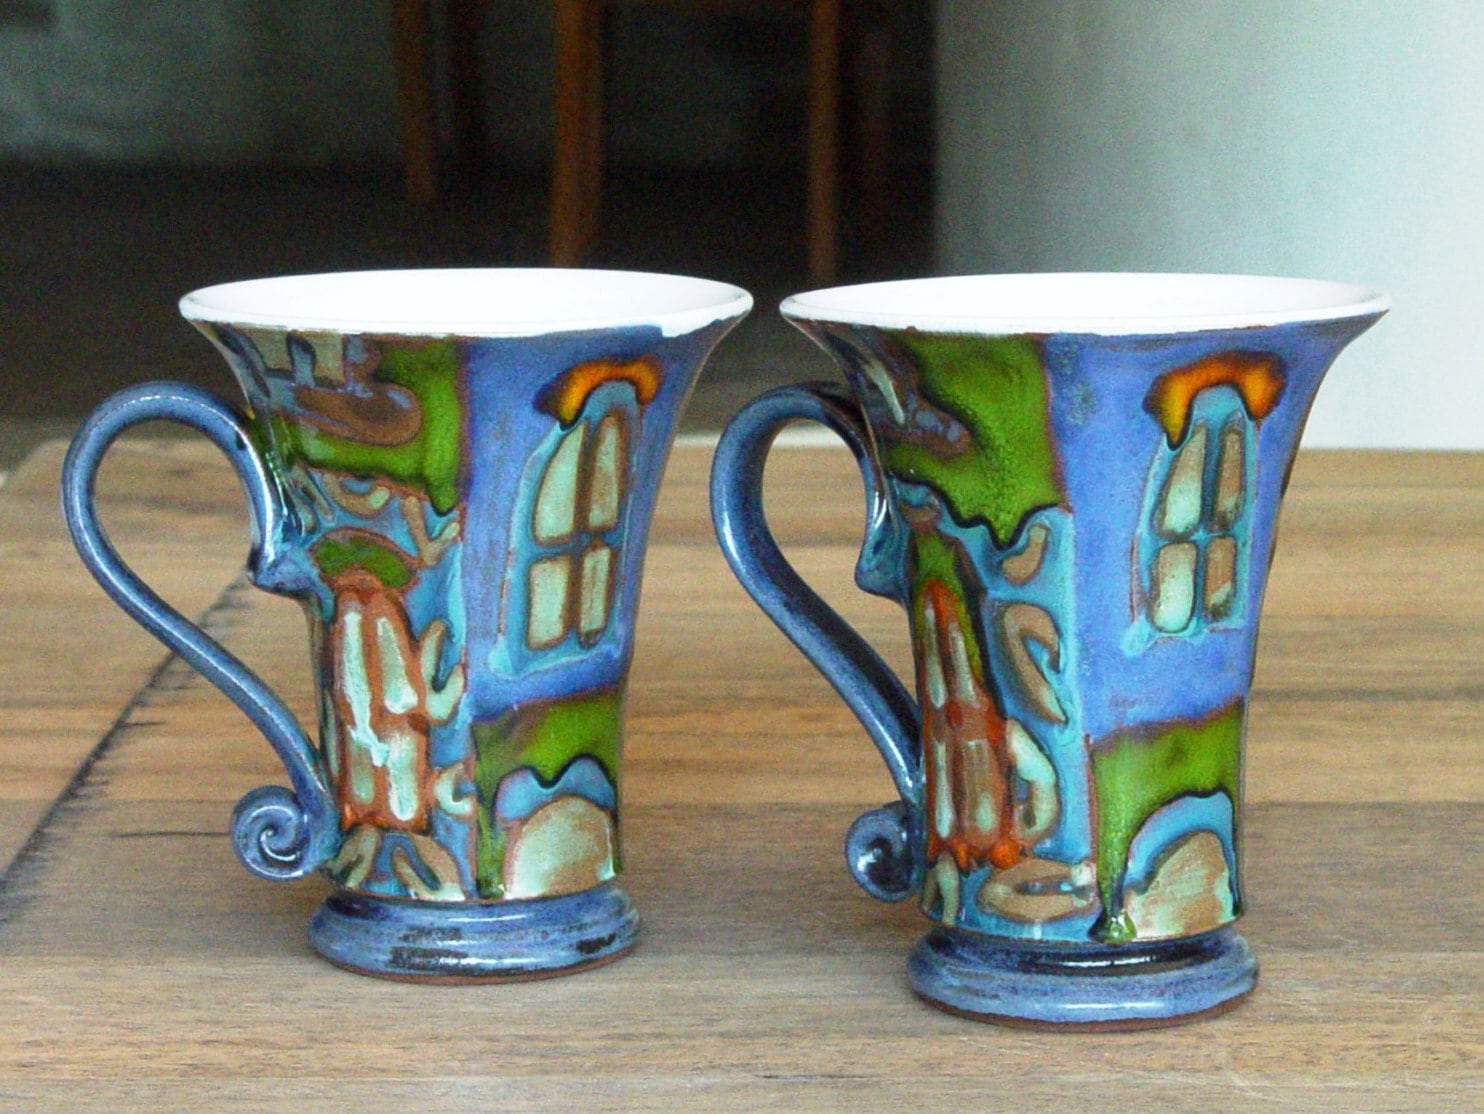  Handmade Red Pottery Mug - Slim Ceramic Cup - Unique Coffee Mug  - Danko Artisan Pottery - Christmas Gift - 150ml - Trees : Handmade Products